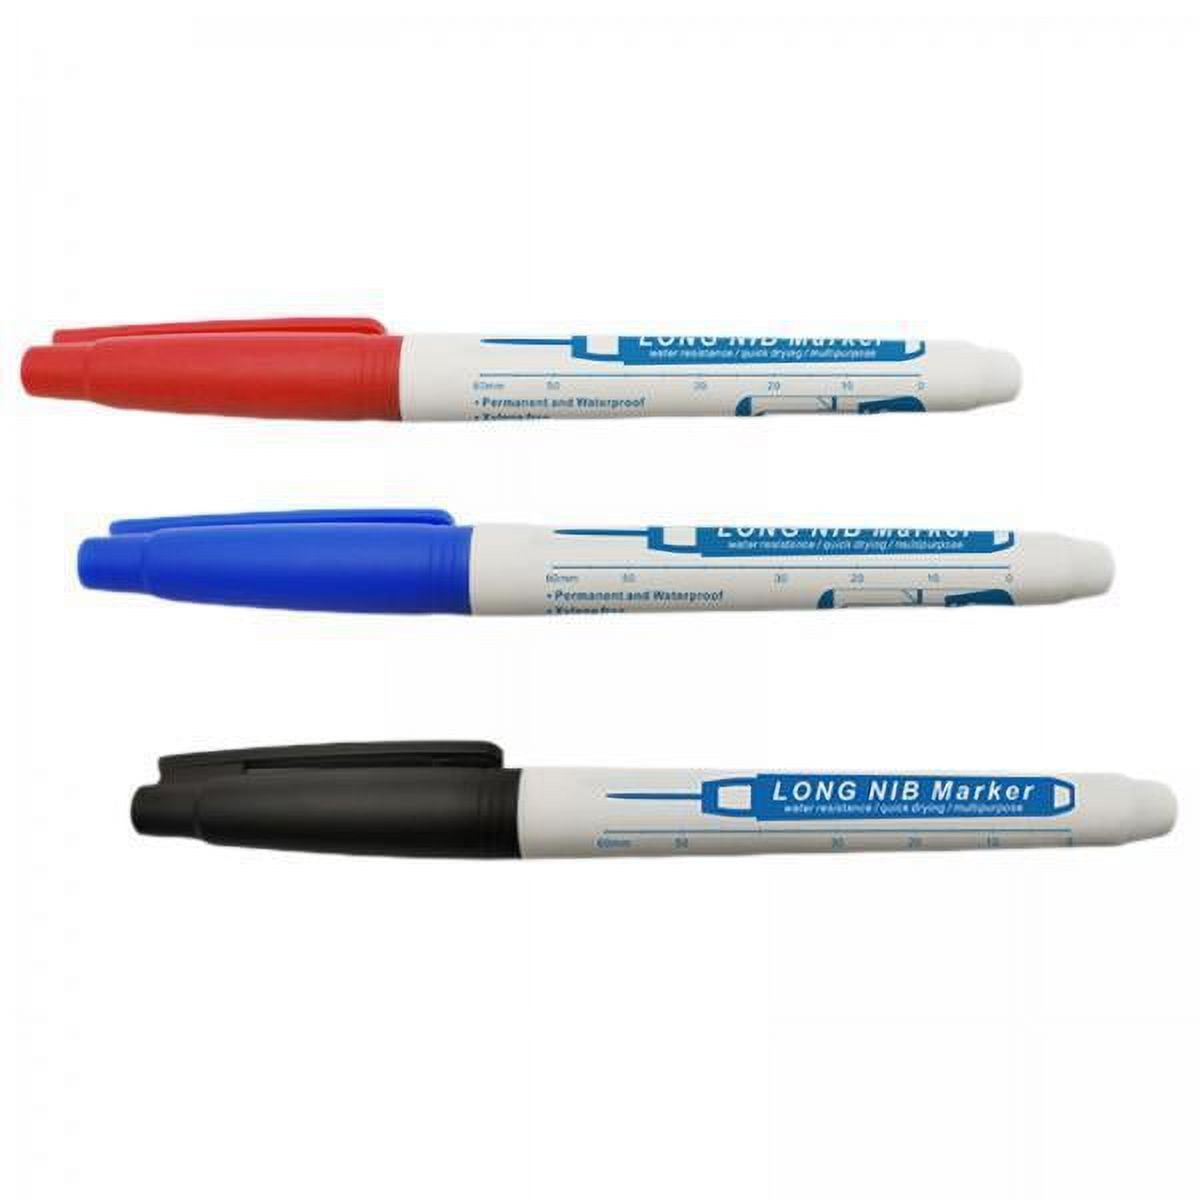 SIPA 3 Pcs 3 lor 30mm Long Nose Marker Permanent Waterproof Pens 1-18,Black  Blue Red Home Deration nruction Hareware Accessories Processing, Car, Book